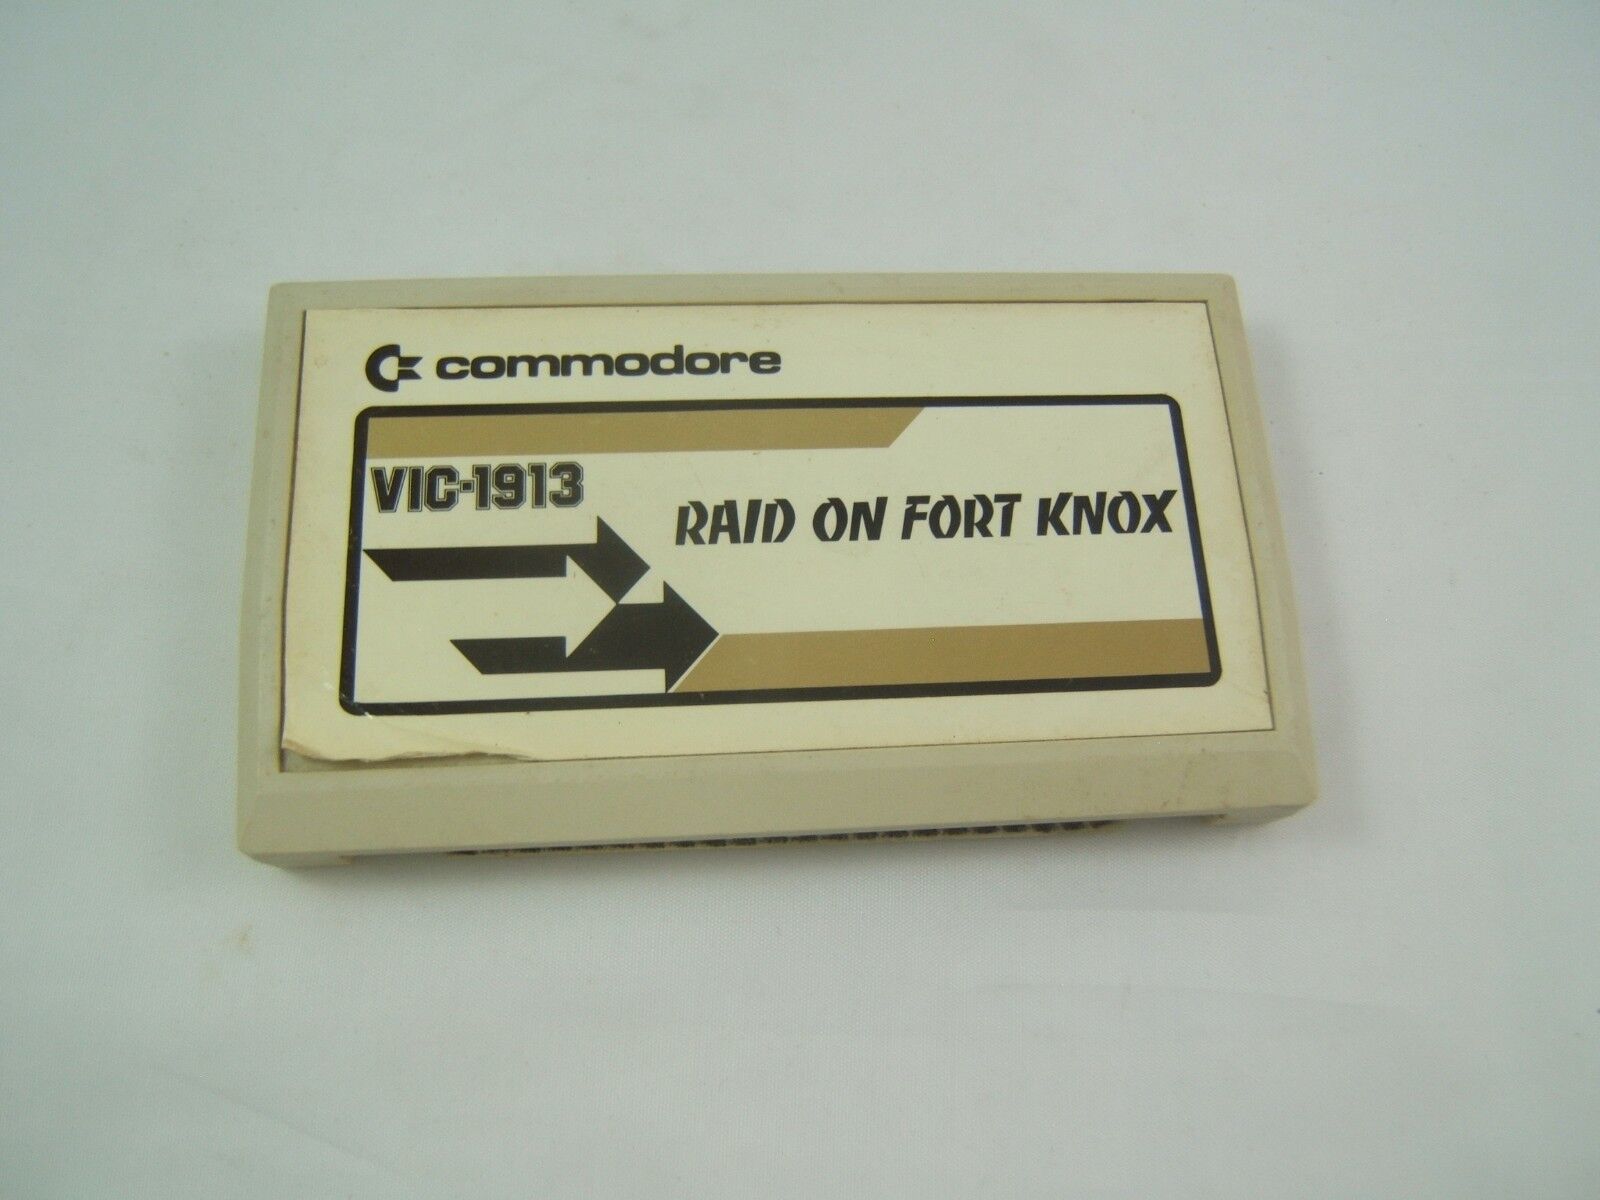 VTG Commodore Computer Vic 20 & 64C Book w/ Vic1913 Raid On Fort Knox Game Lot